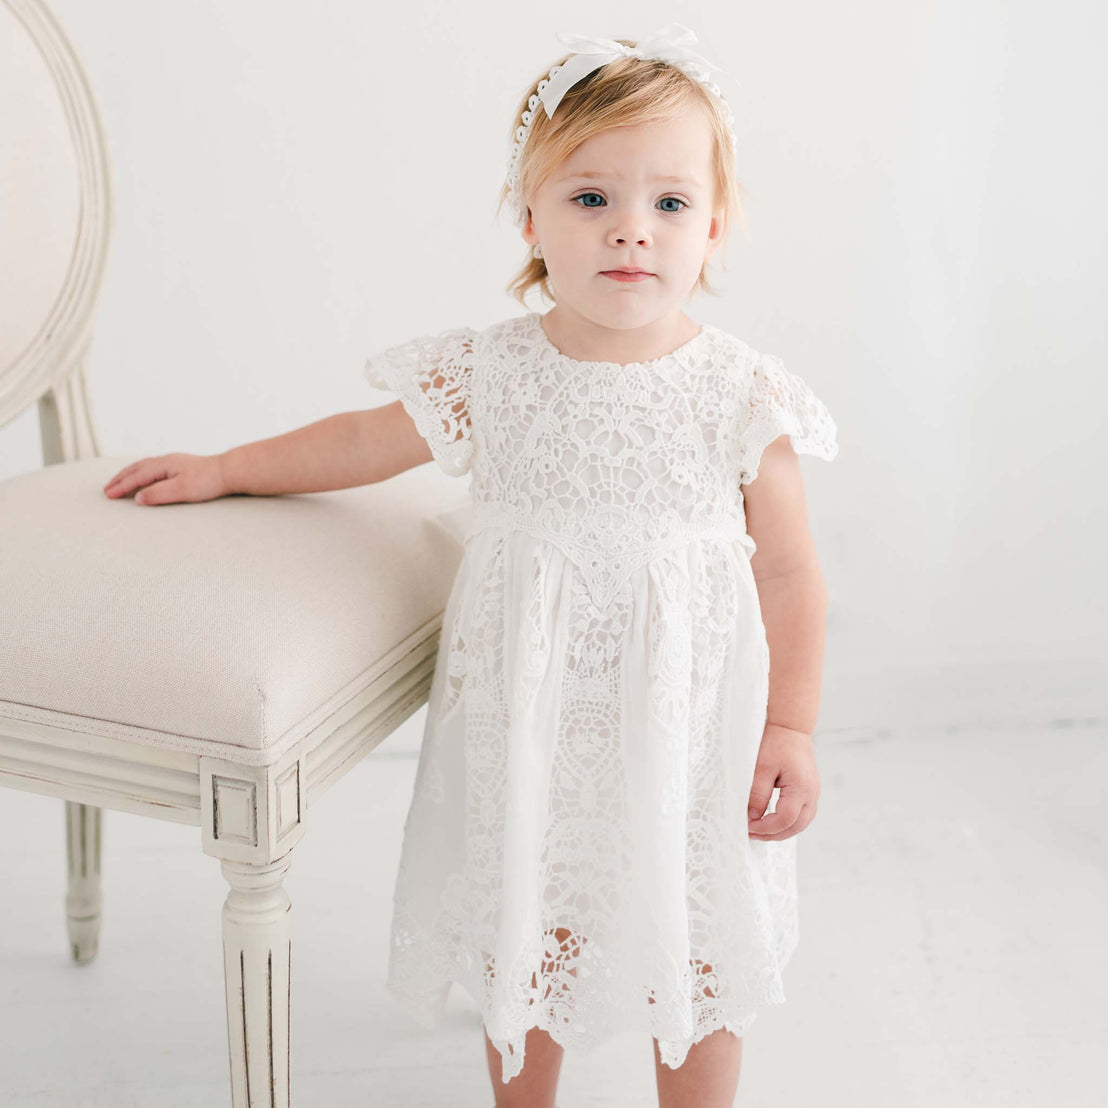 Lace baptism dress for toddler